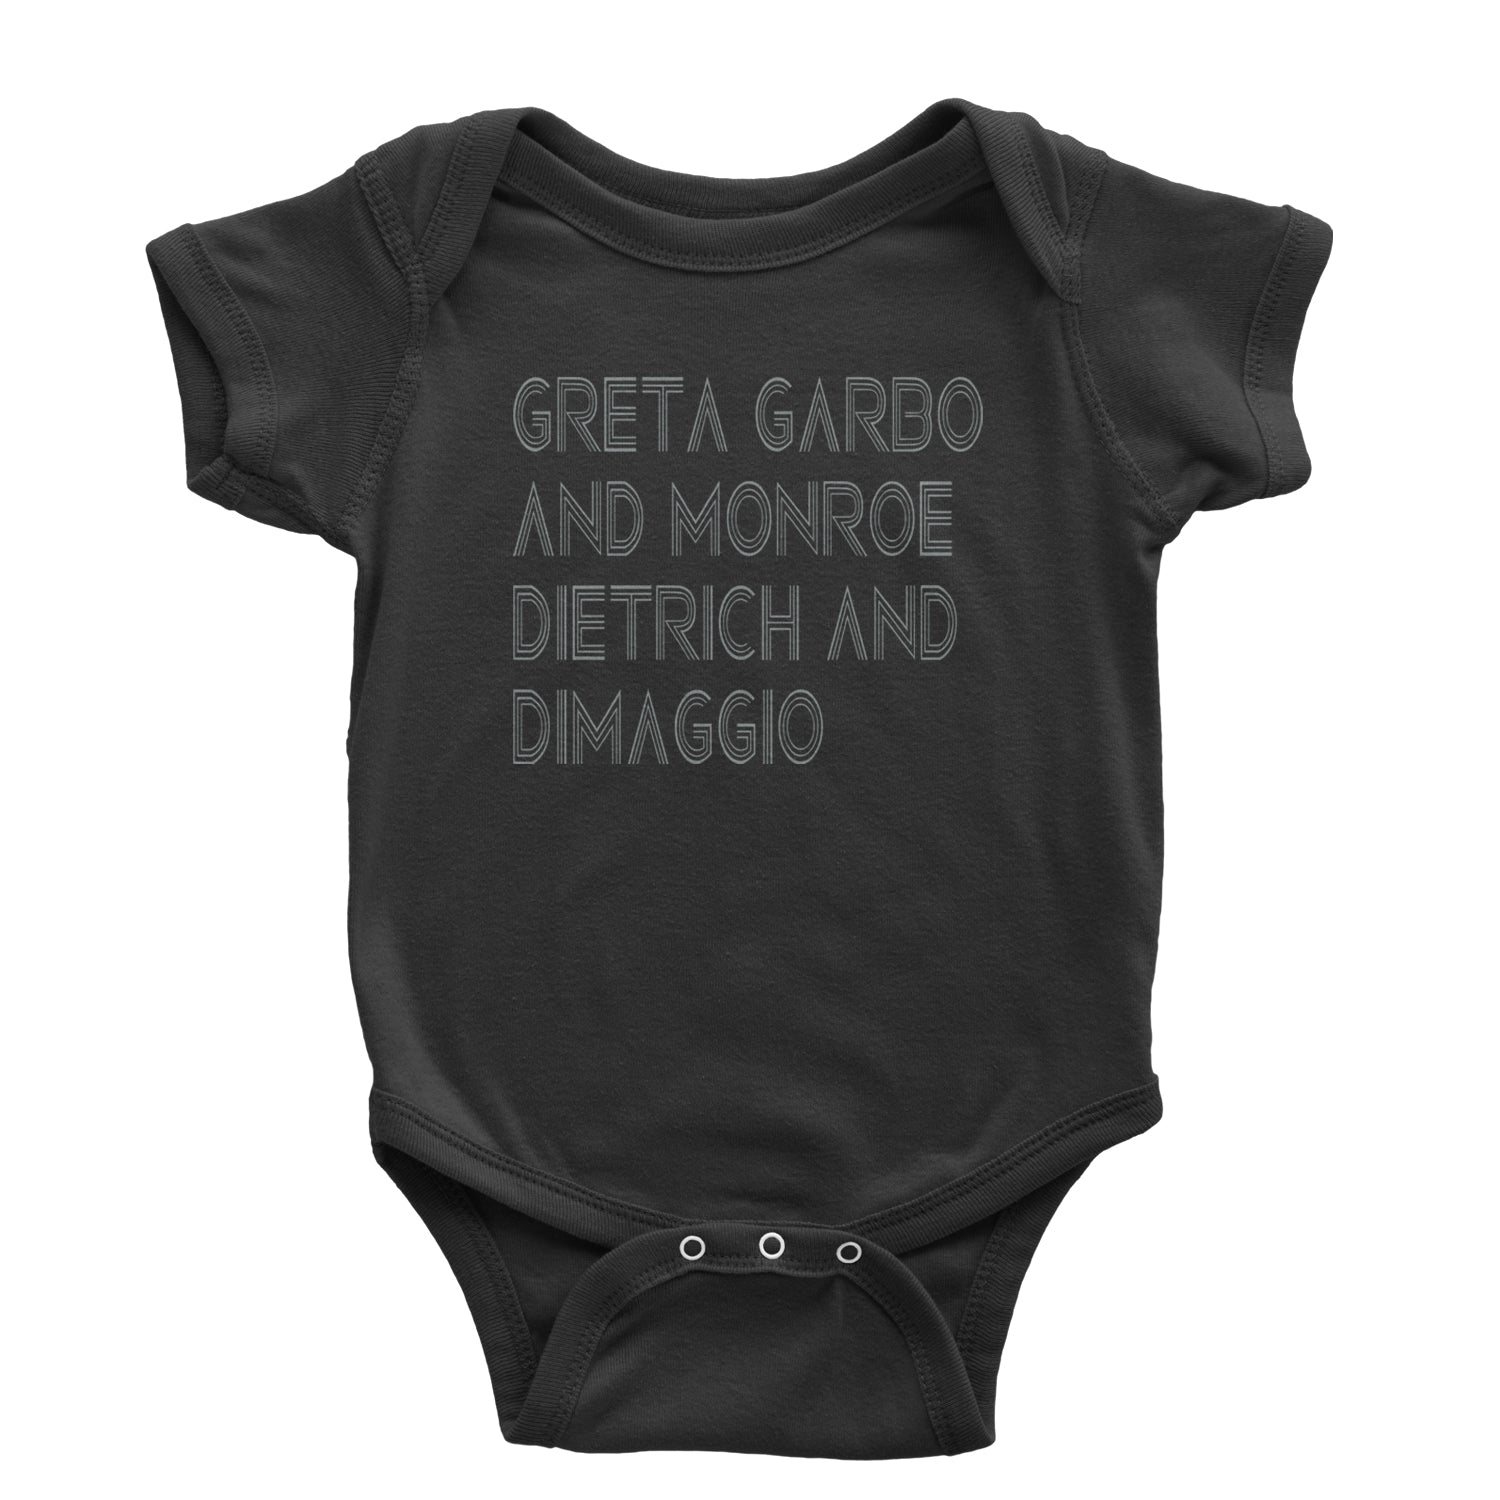 Vogue Greta Garbo And Monroe Celebration Infant One-Piece Romper Bodysuit and Toddler T-shirt